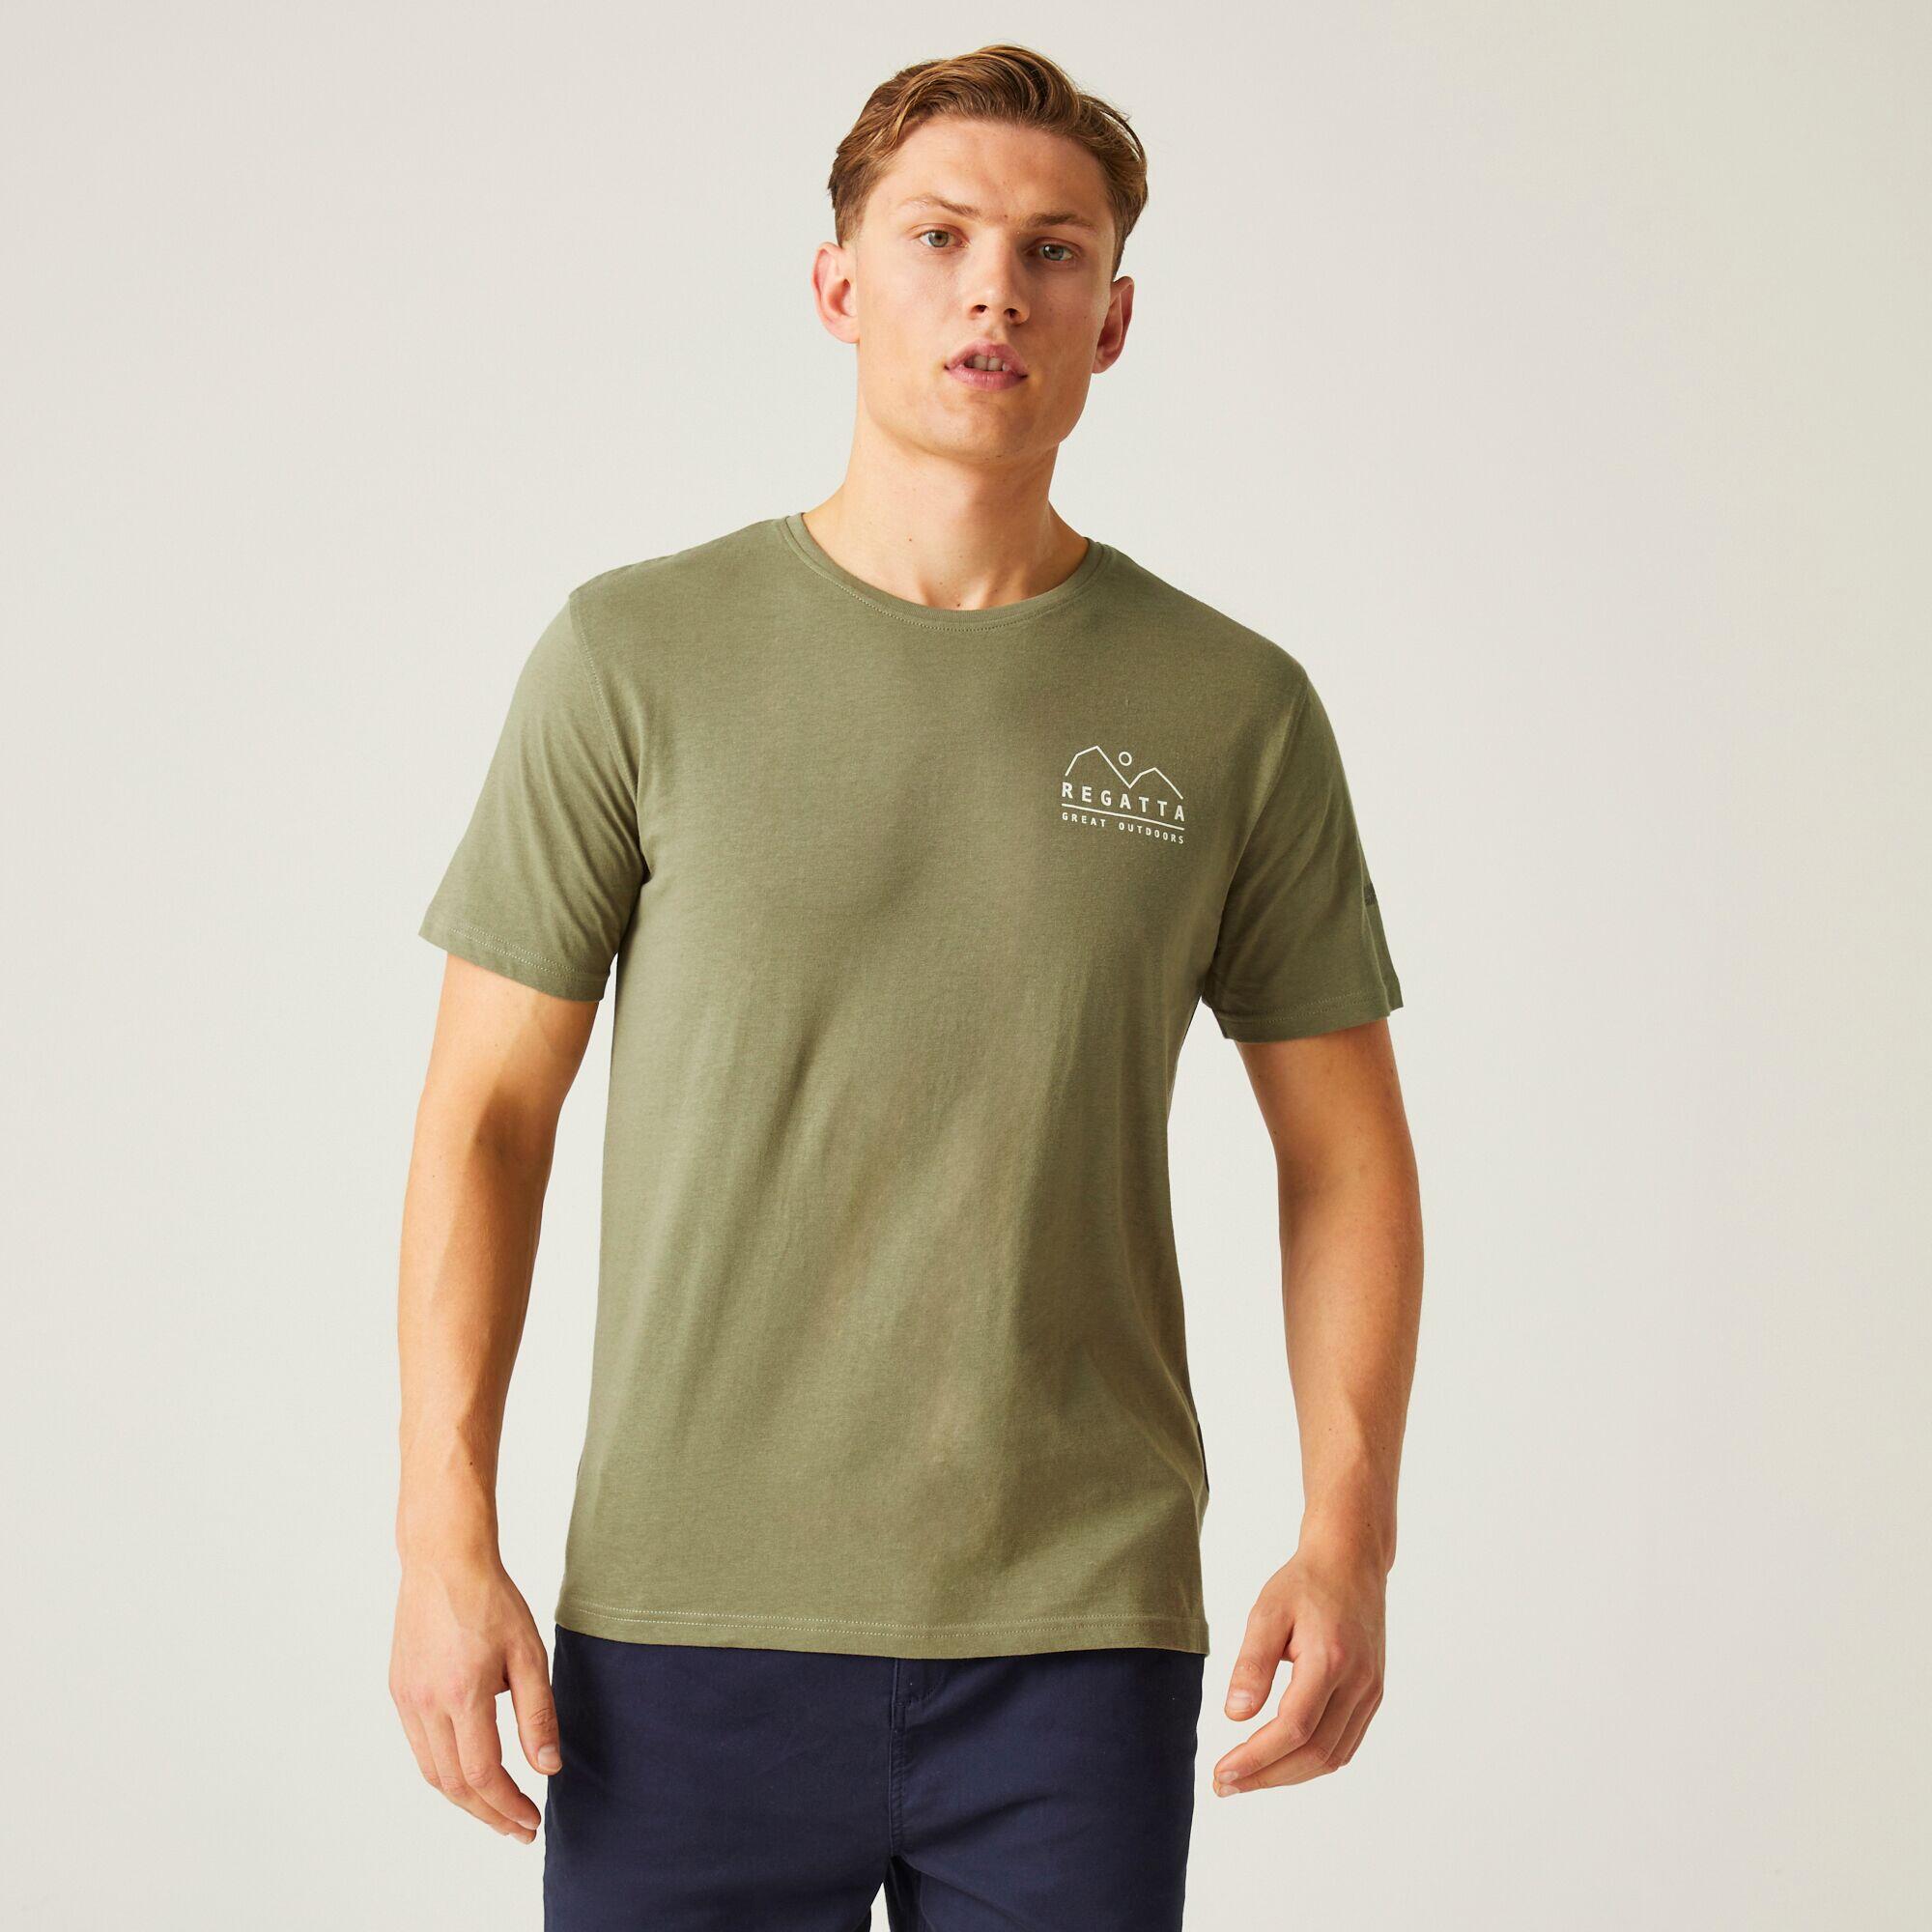 REGATTA Men's Cline VIII T-Shirt